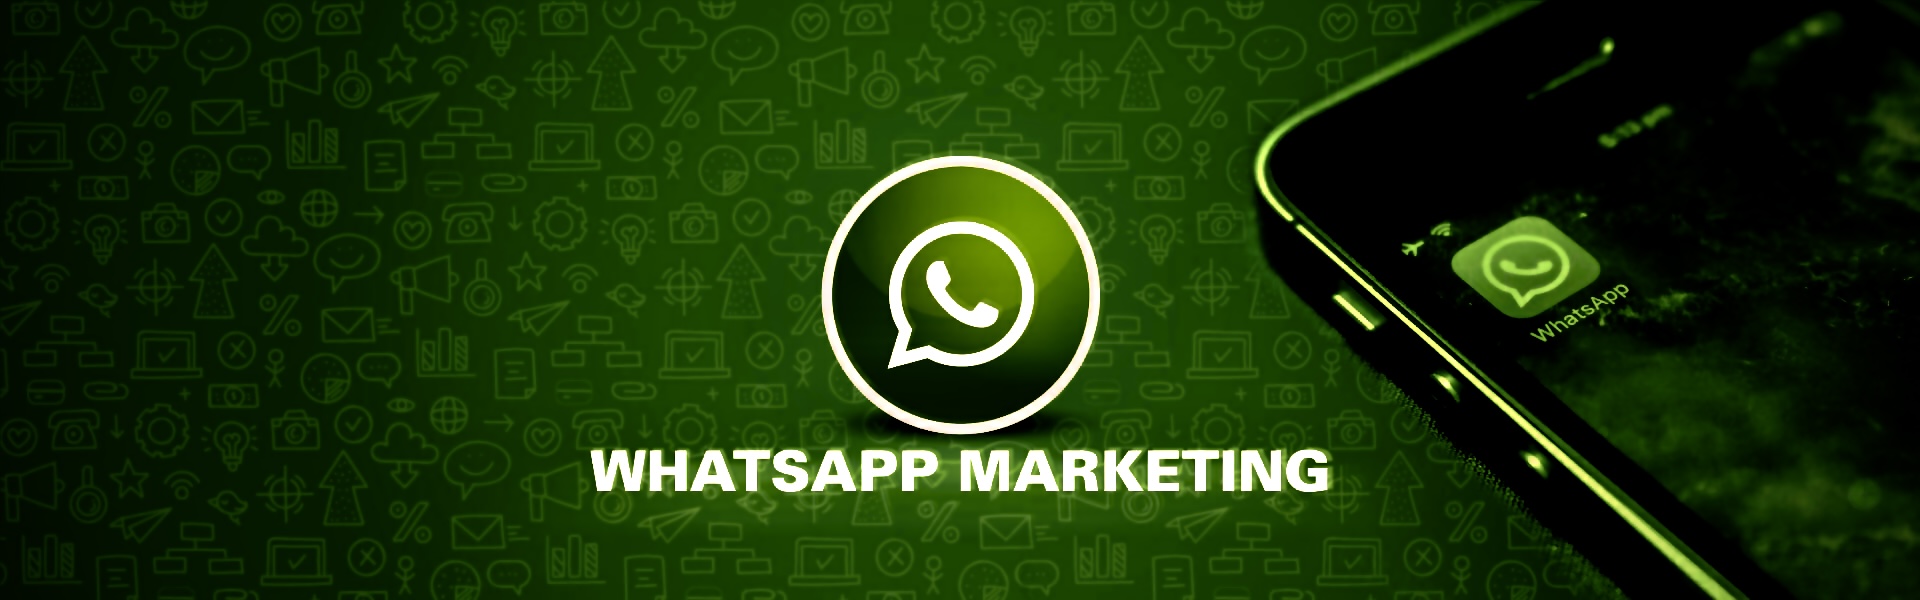 How to grow business through whatsapp marketing..?